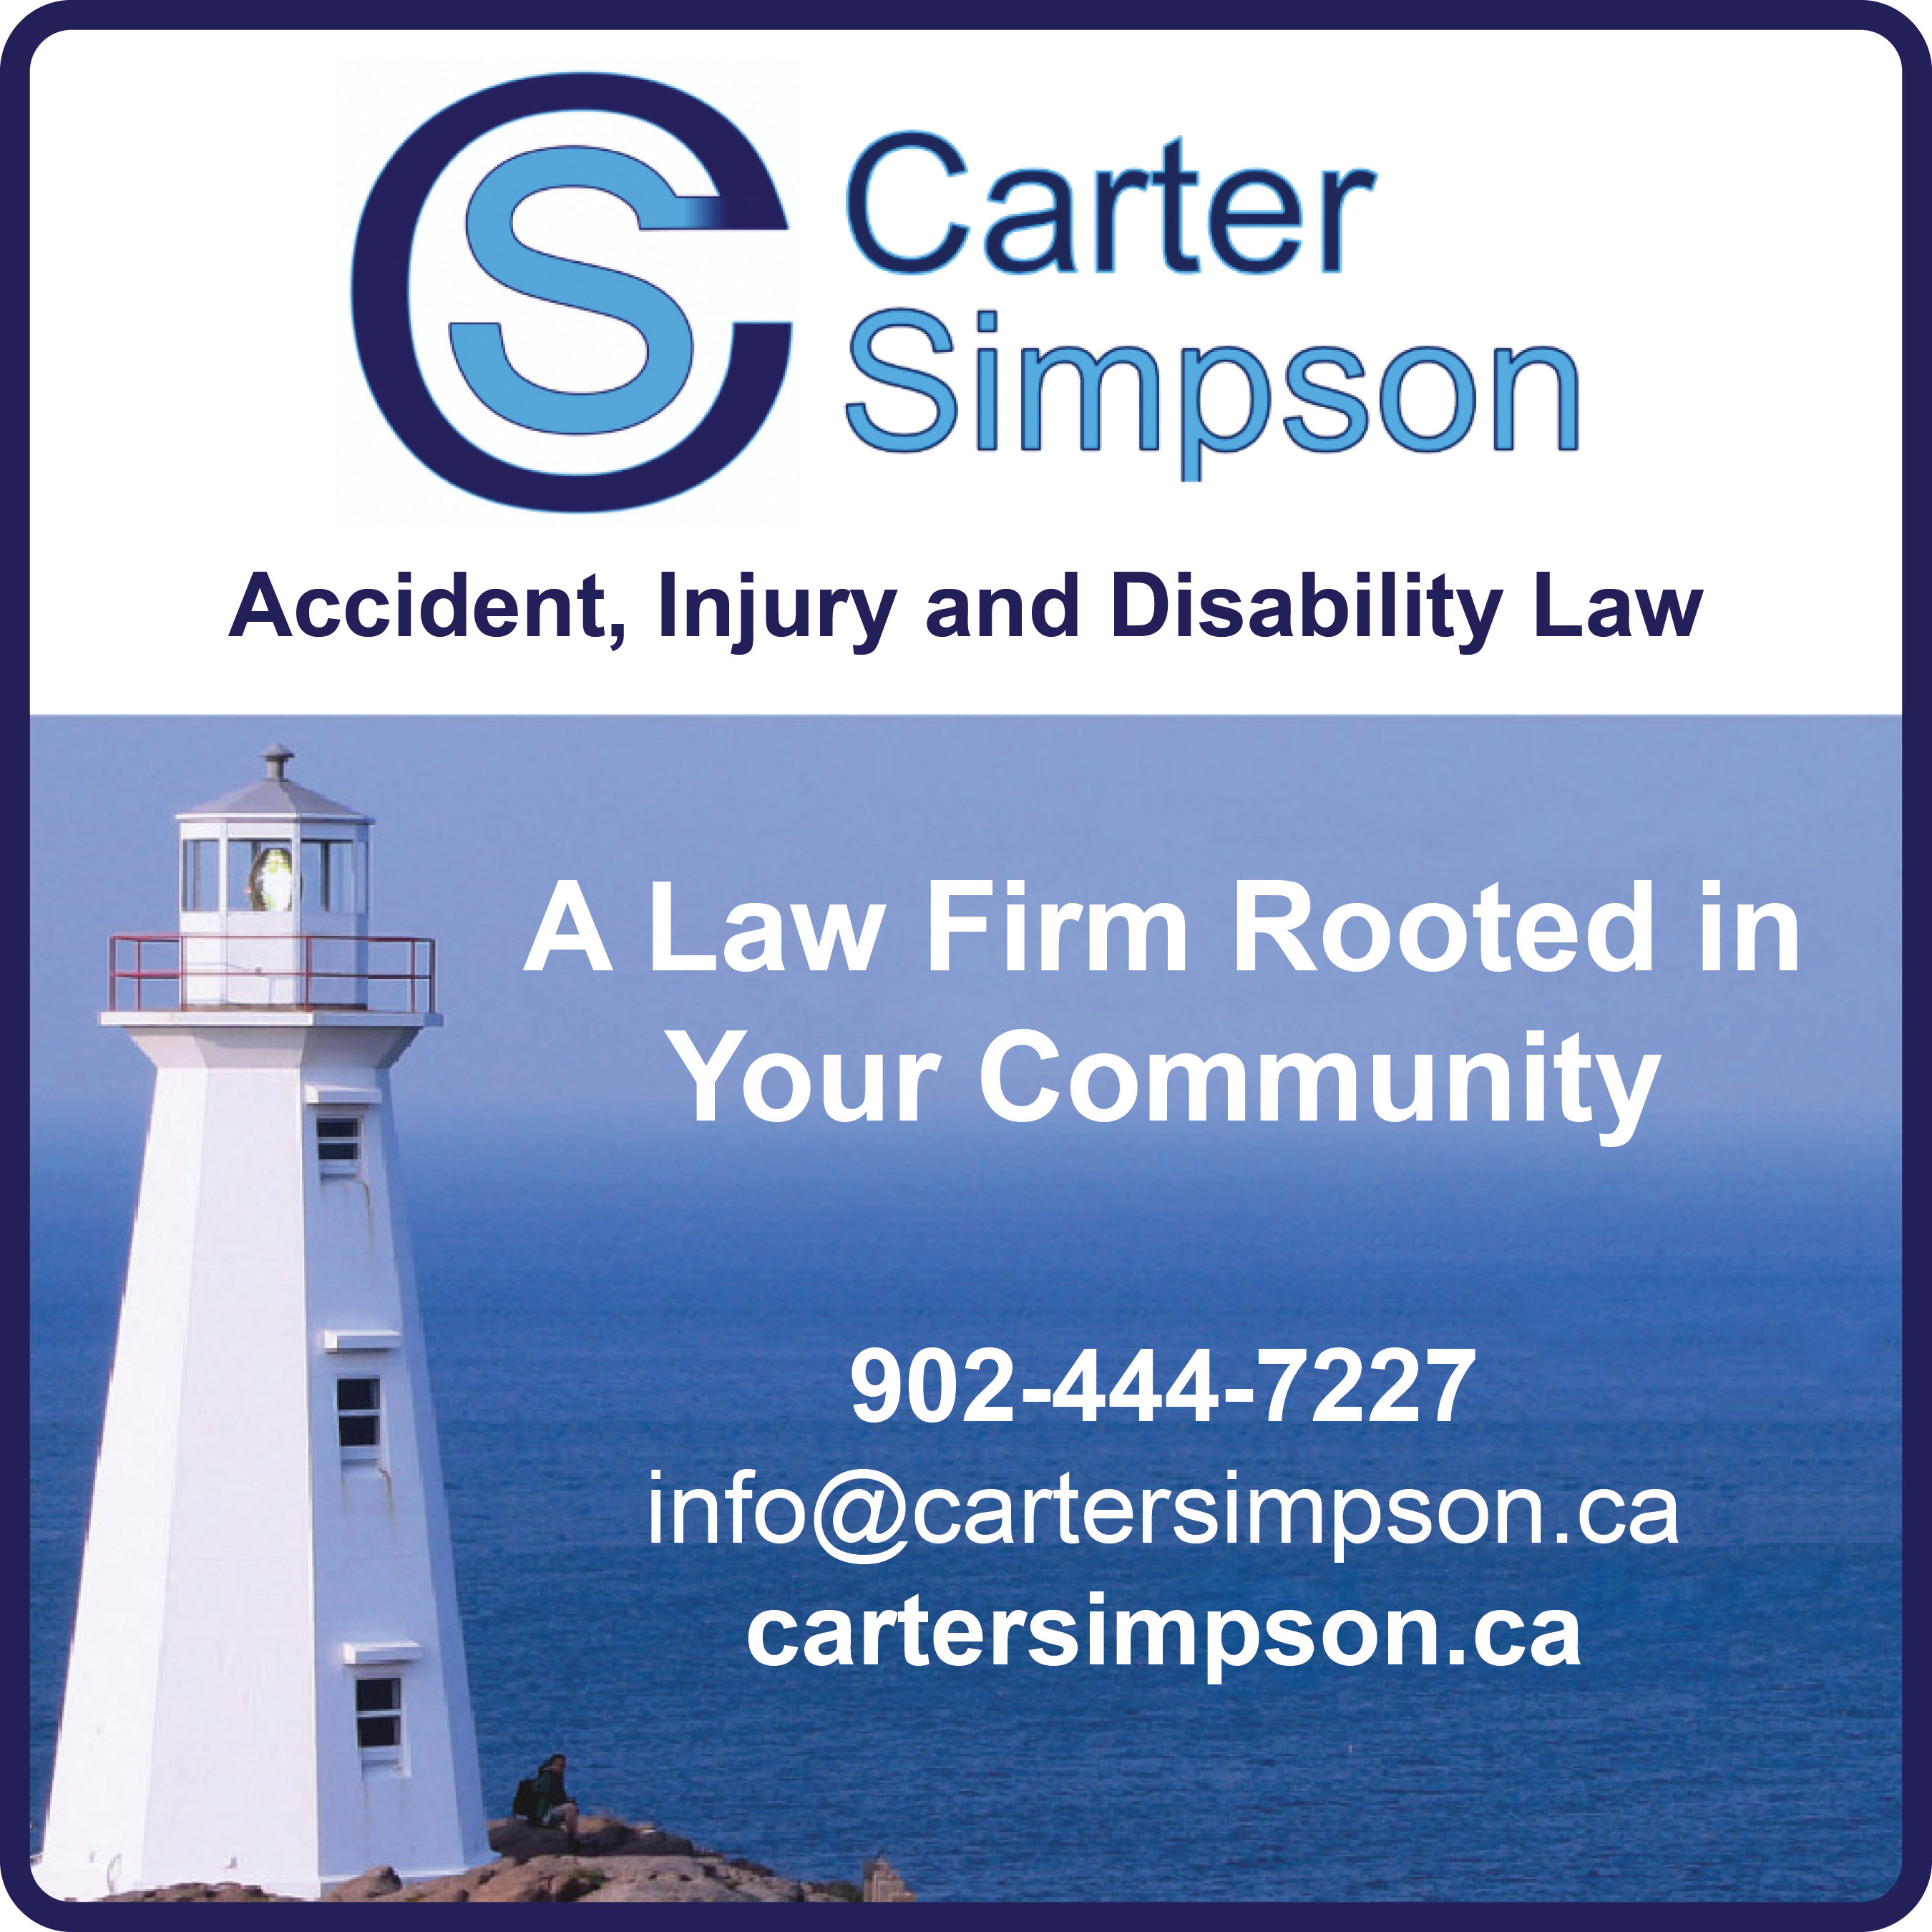 Carter Simpson Law